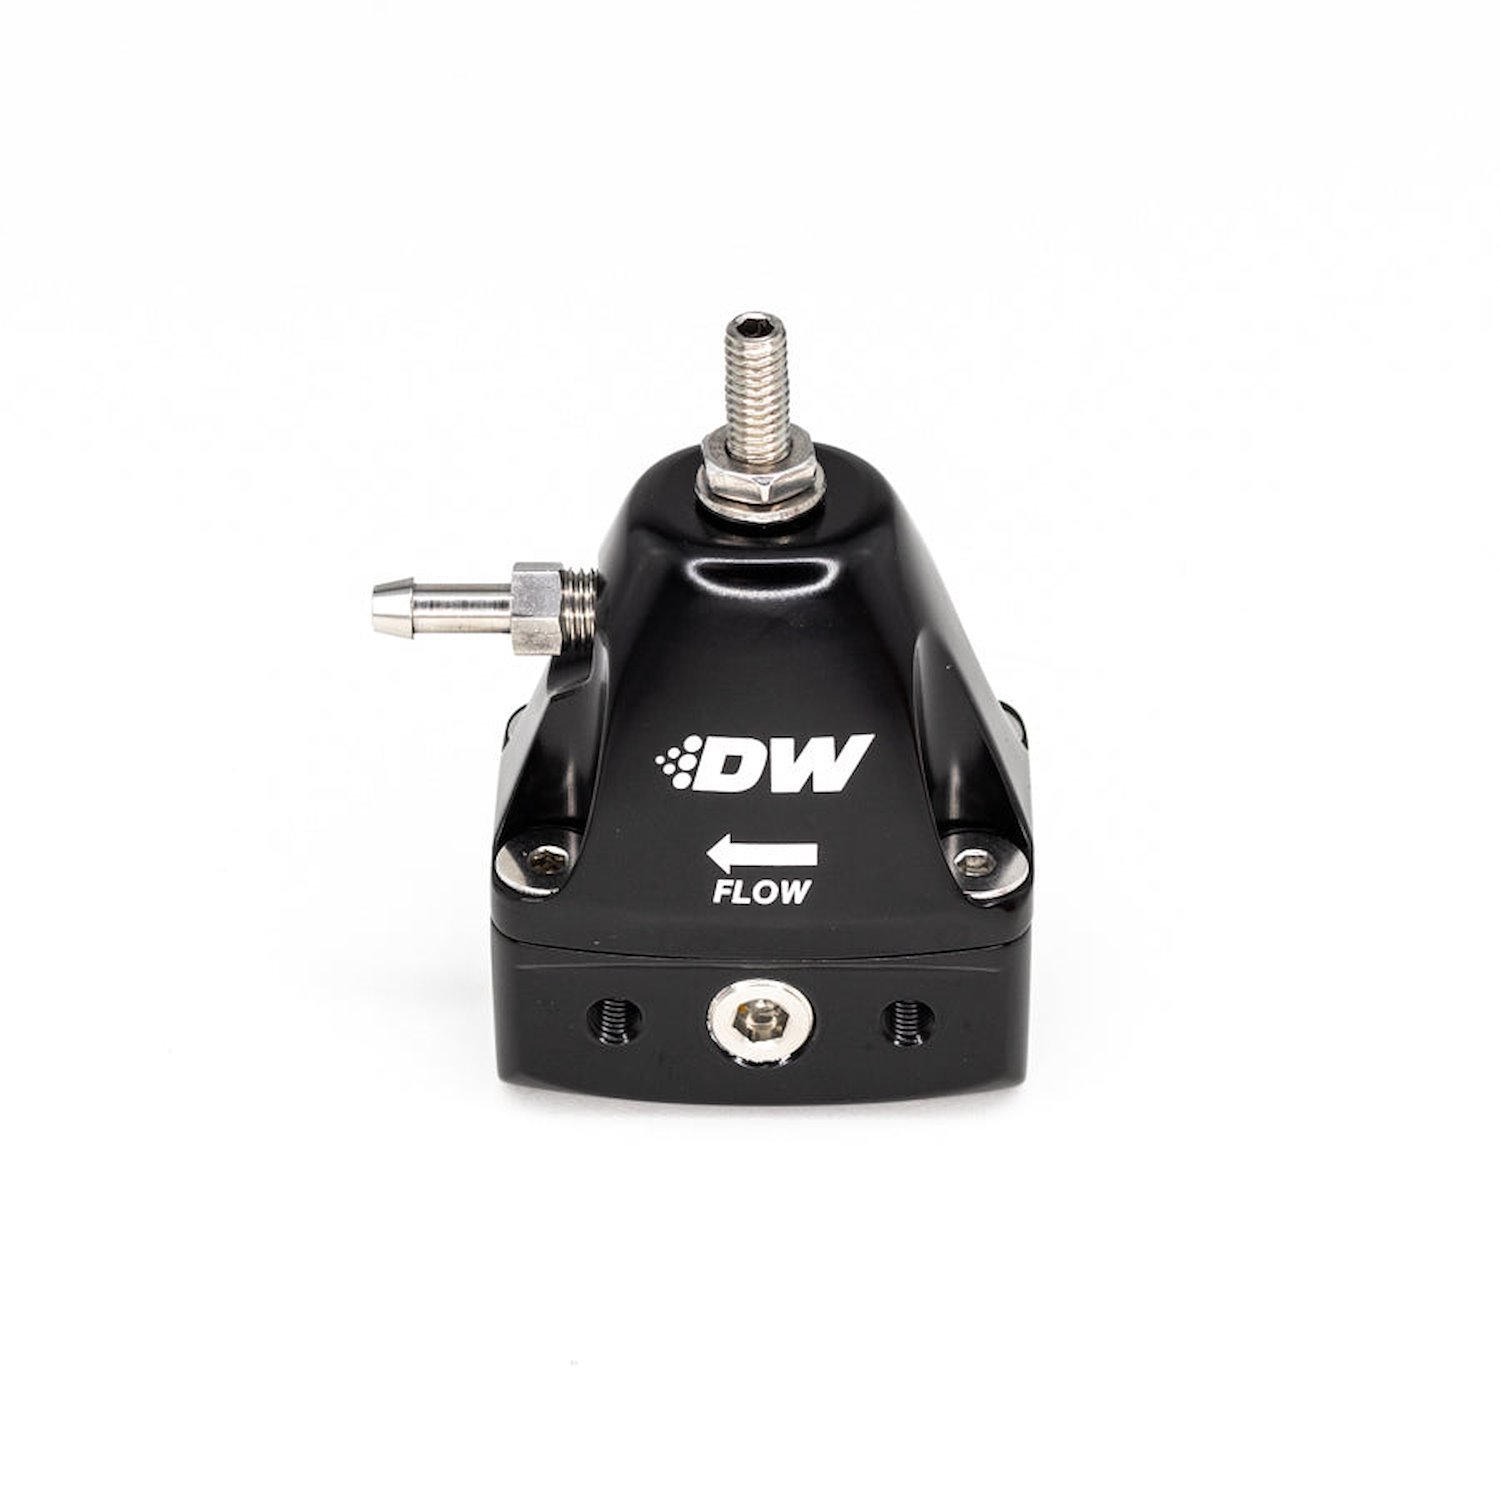 61001FRB DWR1000iL in-line adjustable fuel pressure regulator universal fitment - blackT6061 Aluminum